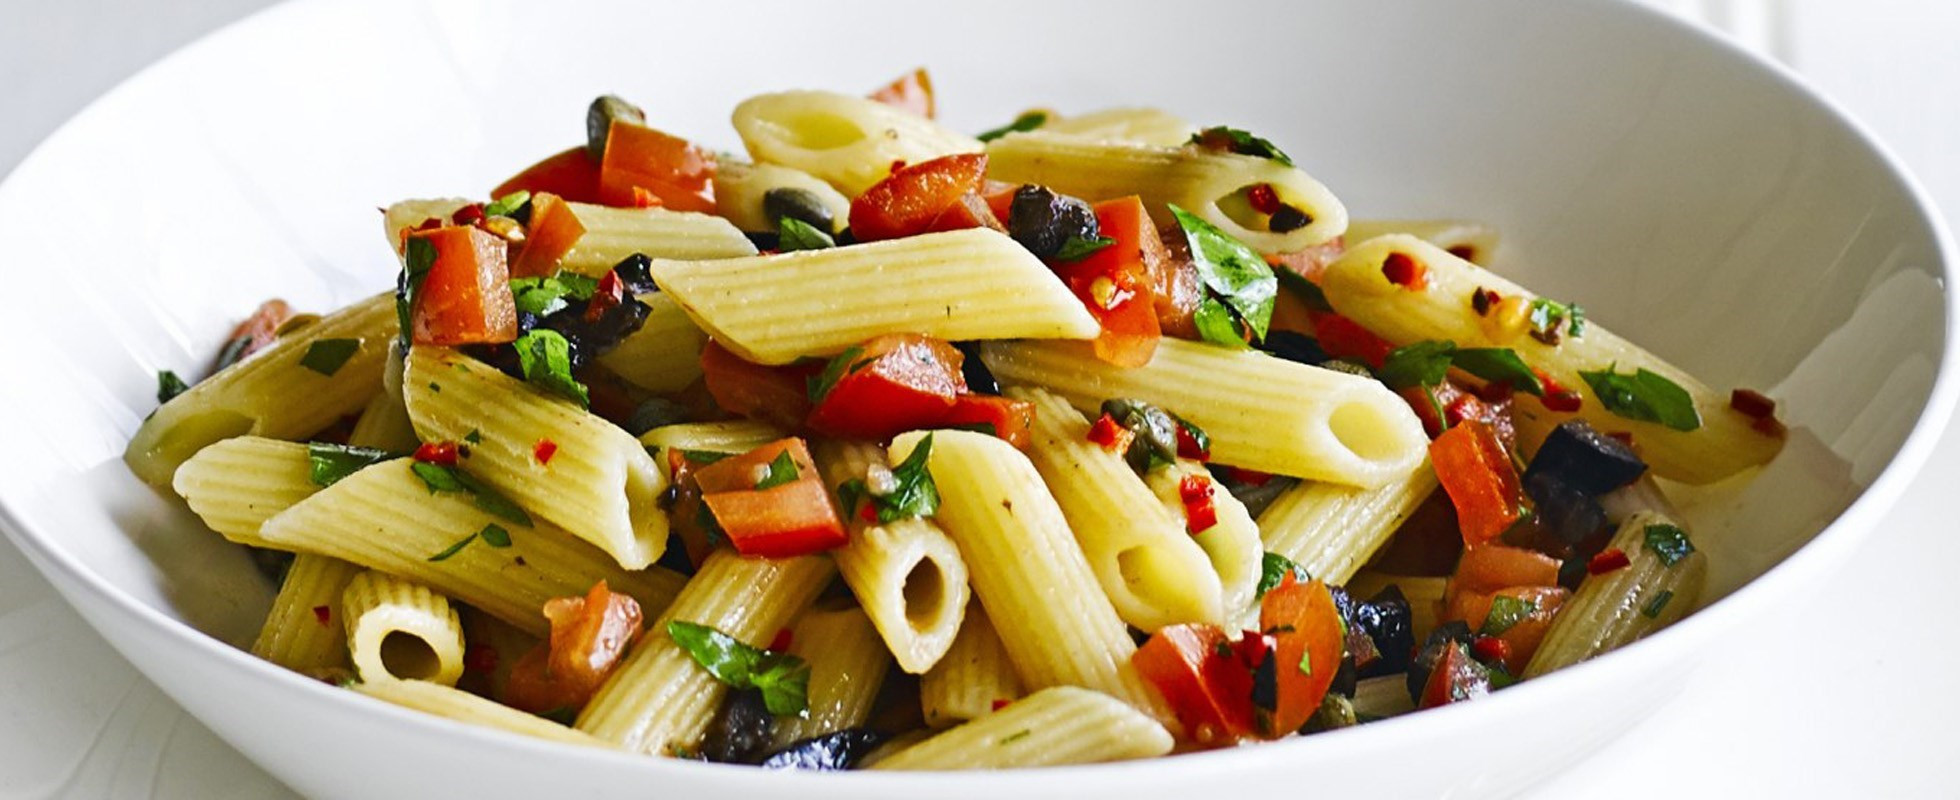 Easy Vegetarian Pasta Recipes
 15 Quick And Easy Ve arian Pasta Recipes olive magazine